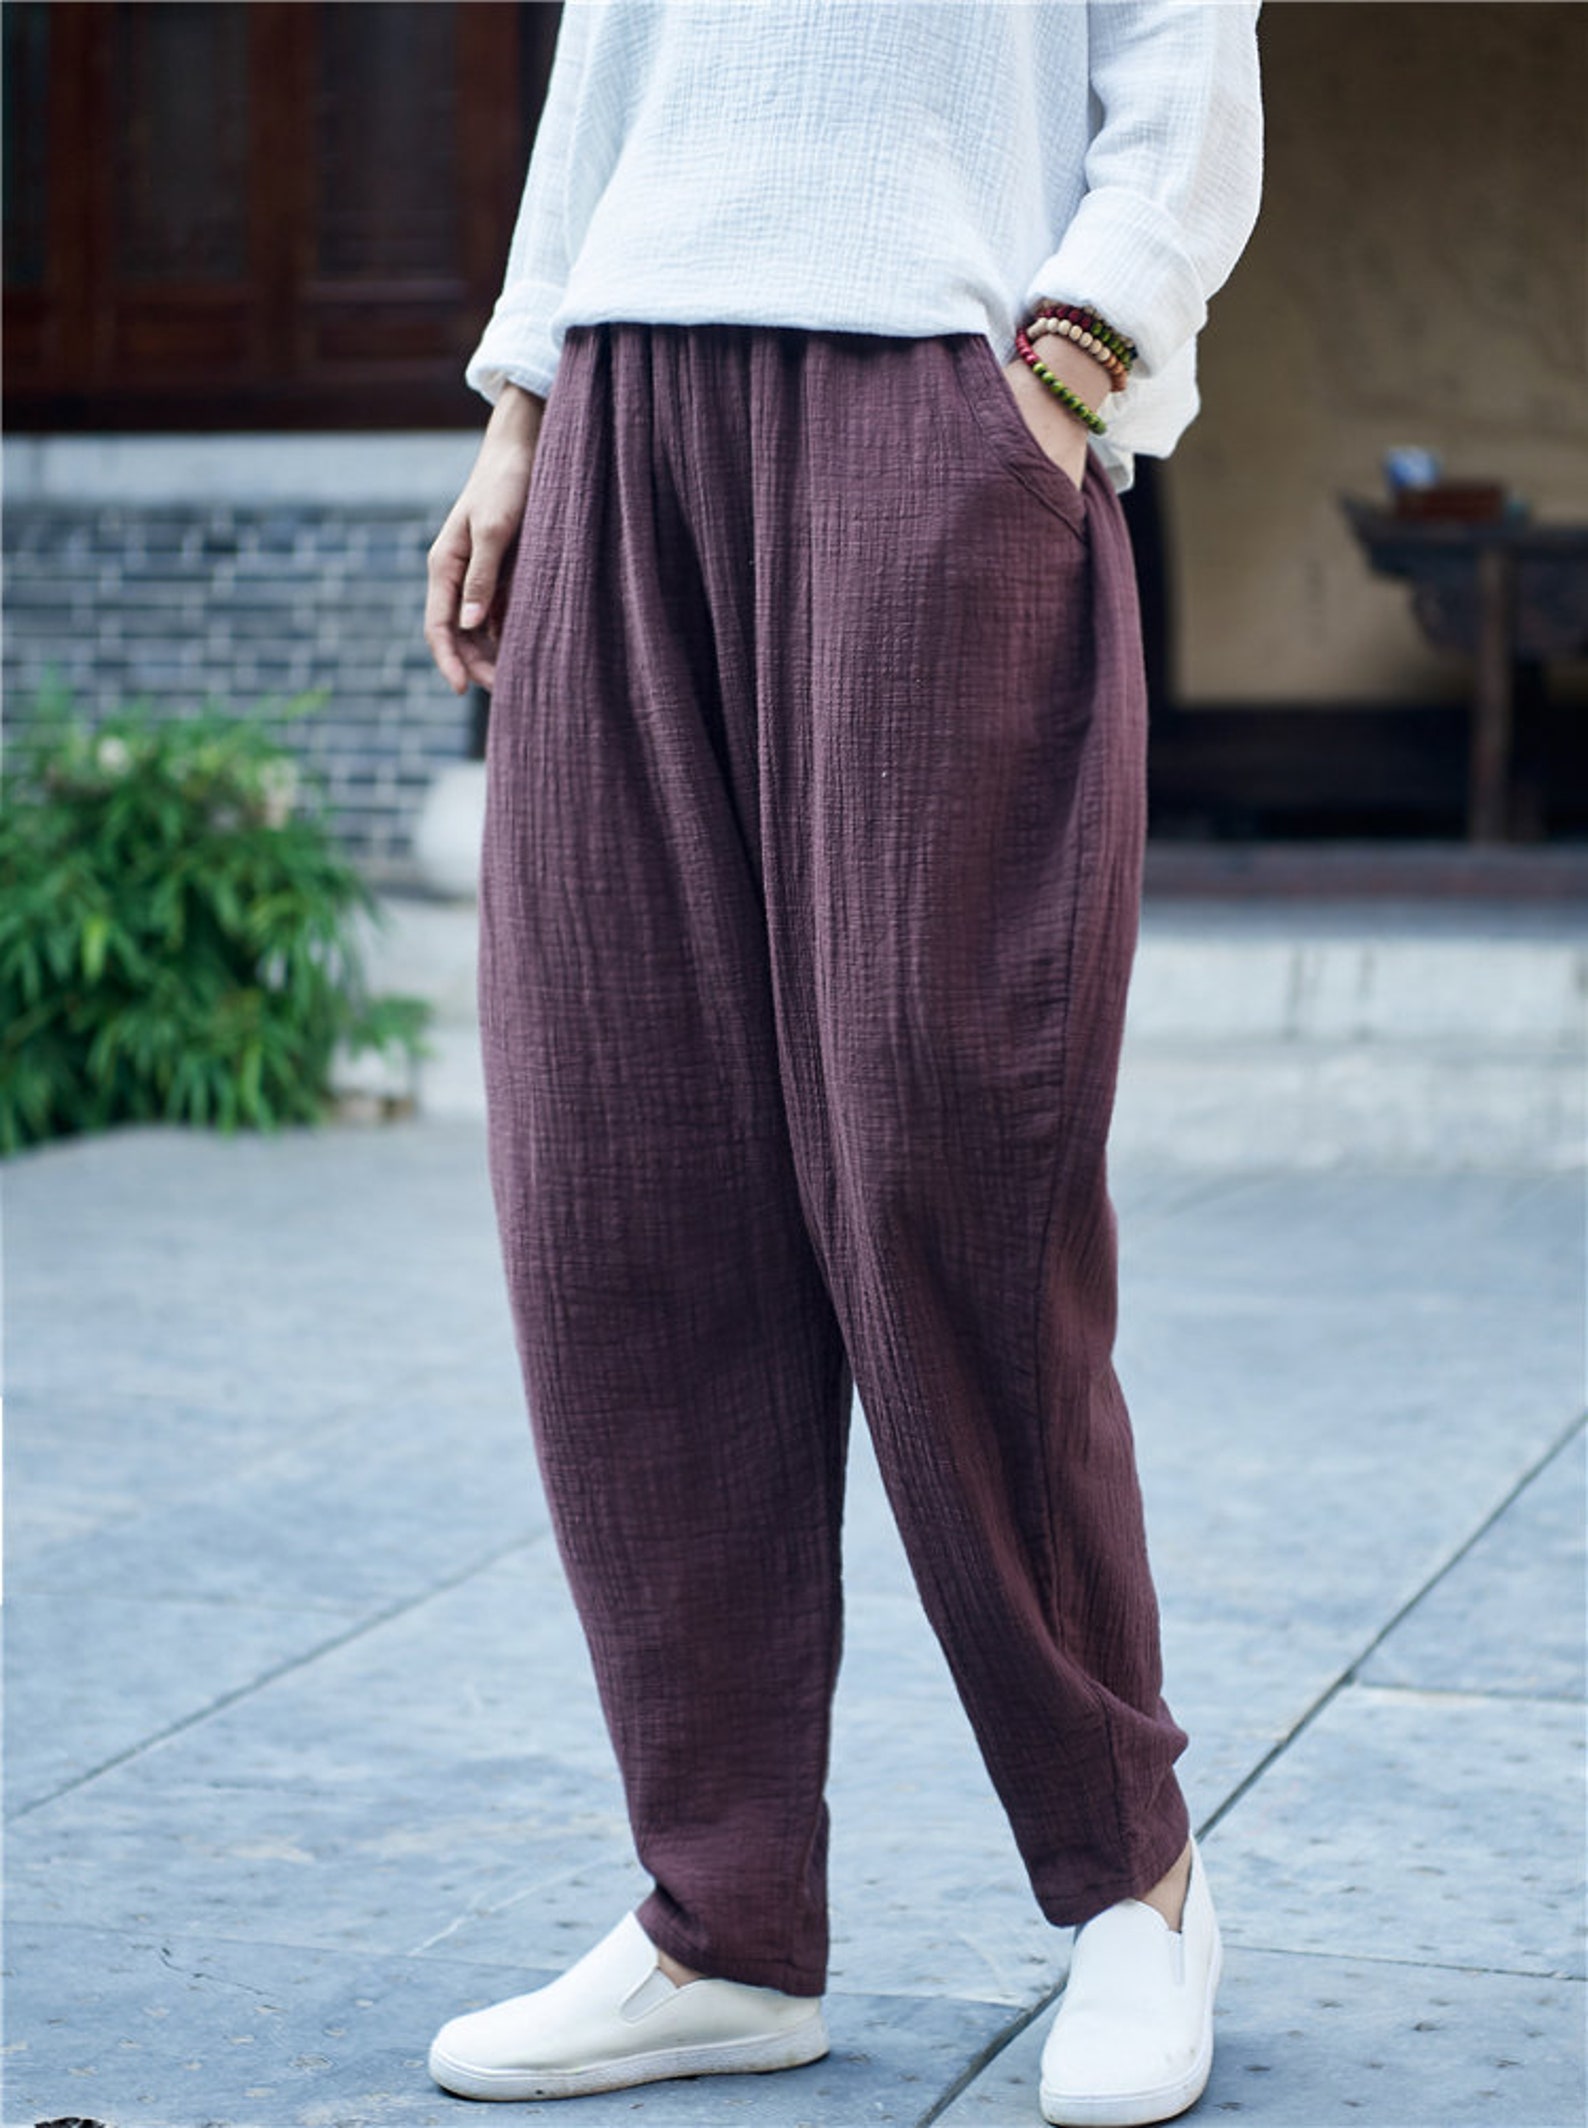 Women's summer linen trousers/breathable casual linen | Etsy